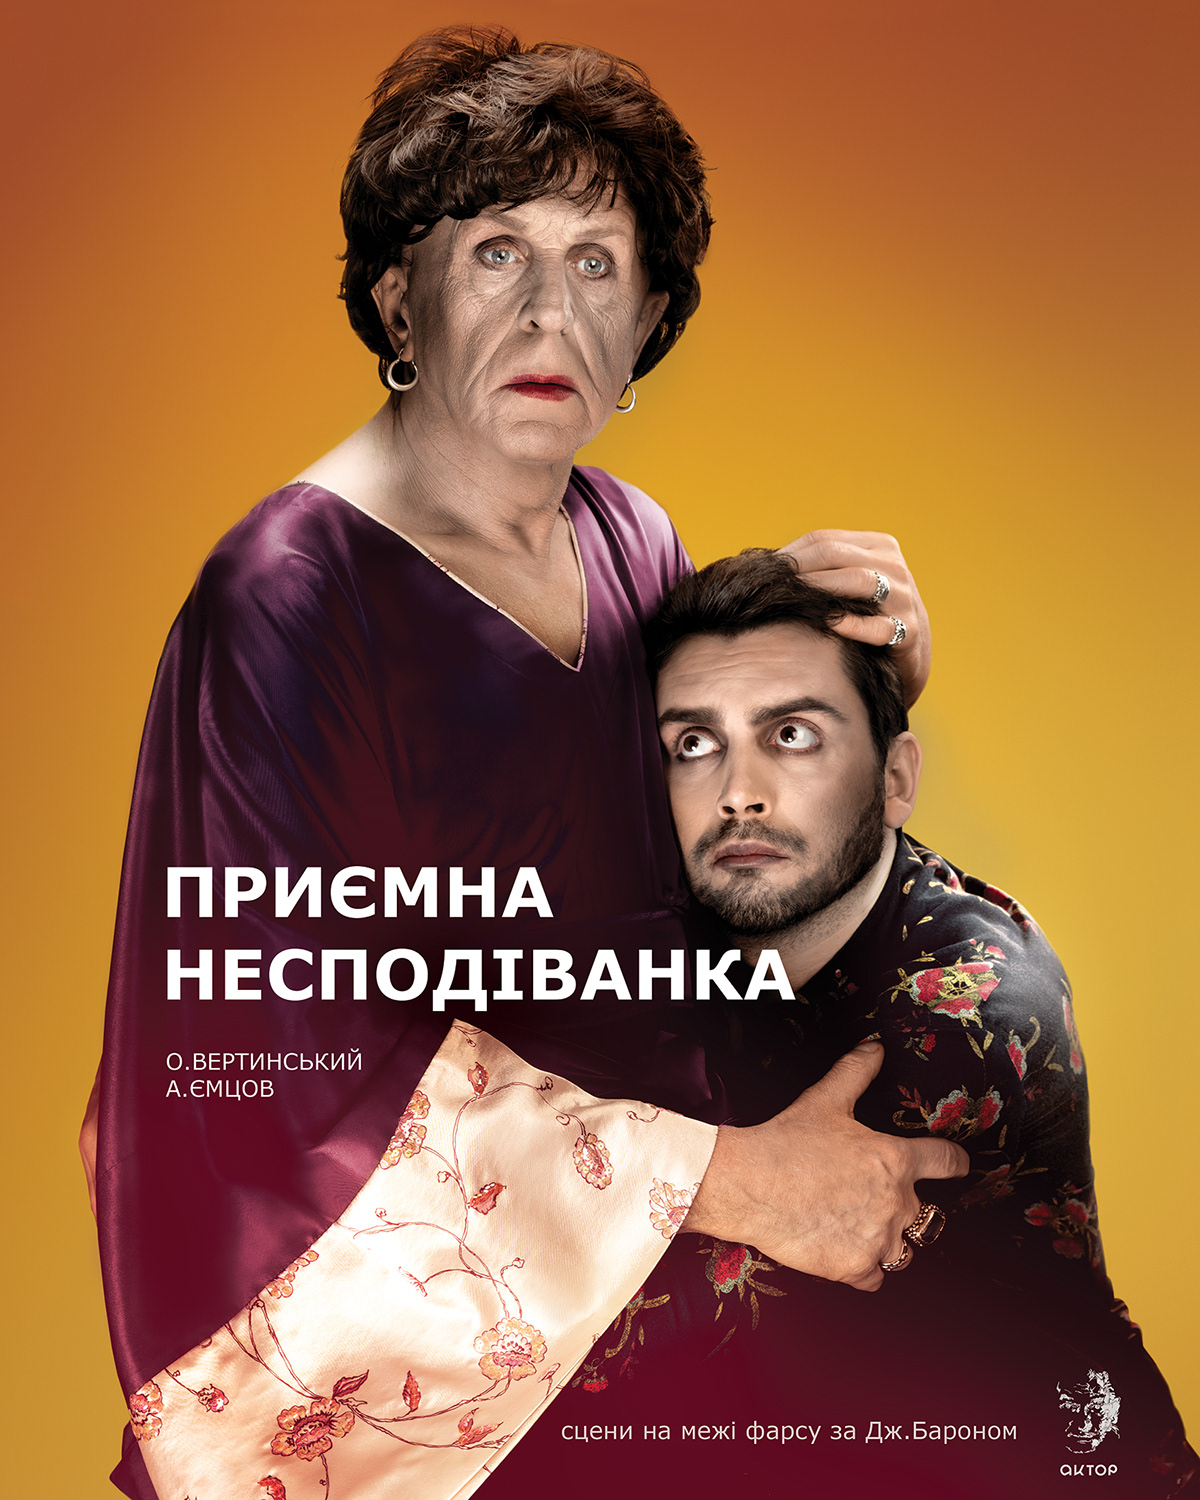 Theatre poster ukraine Kyiv art movie bulgakov actor